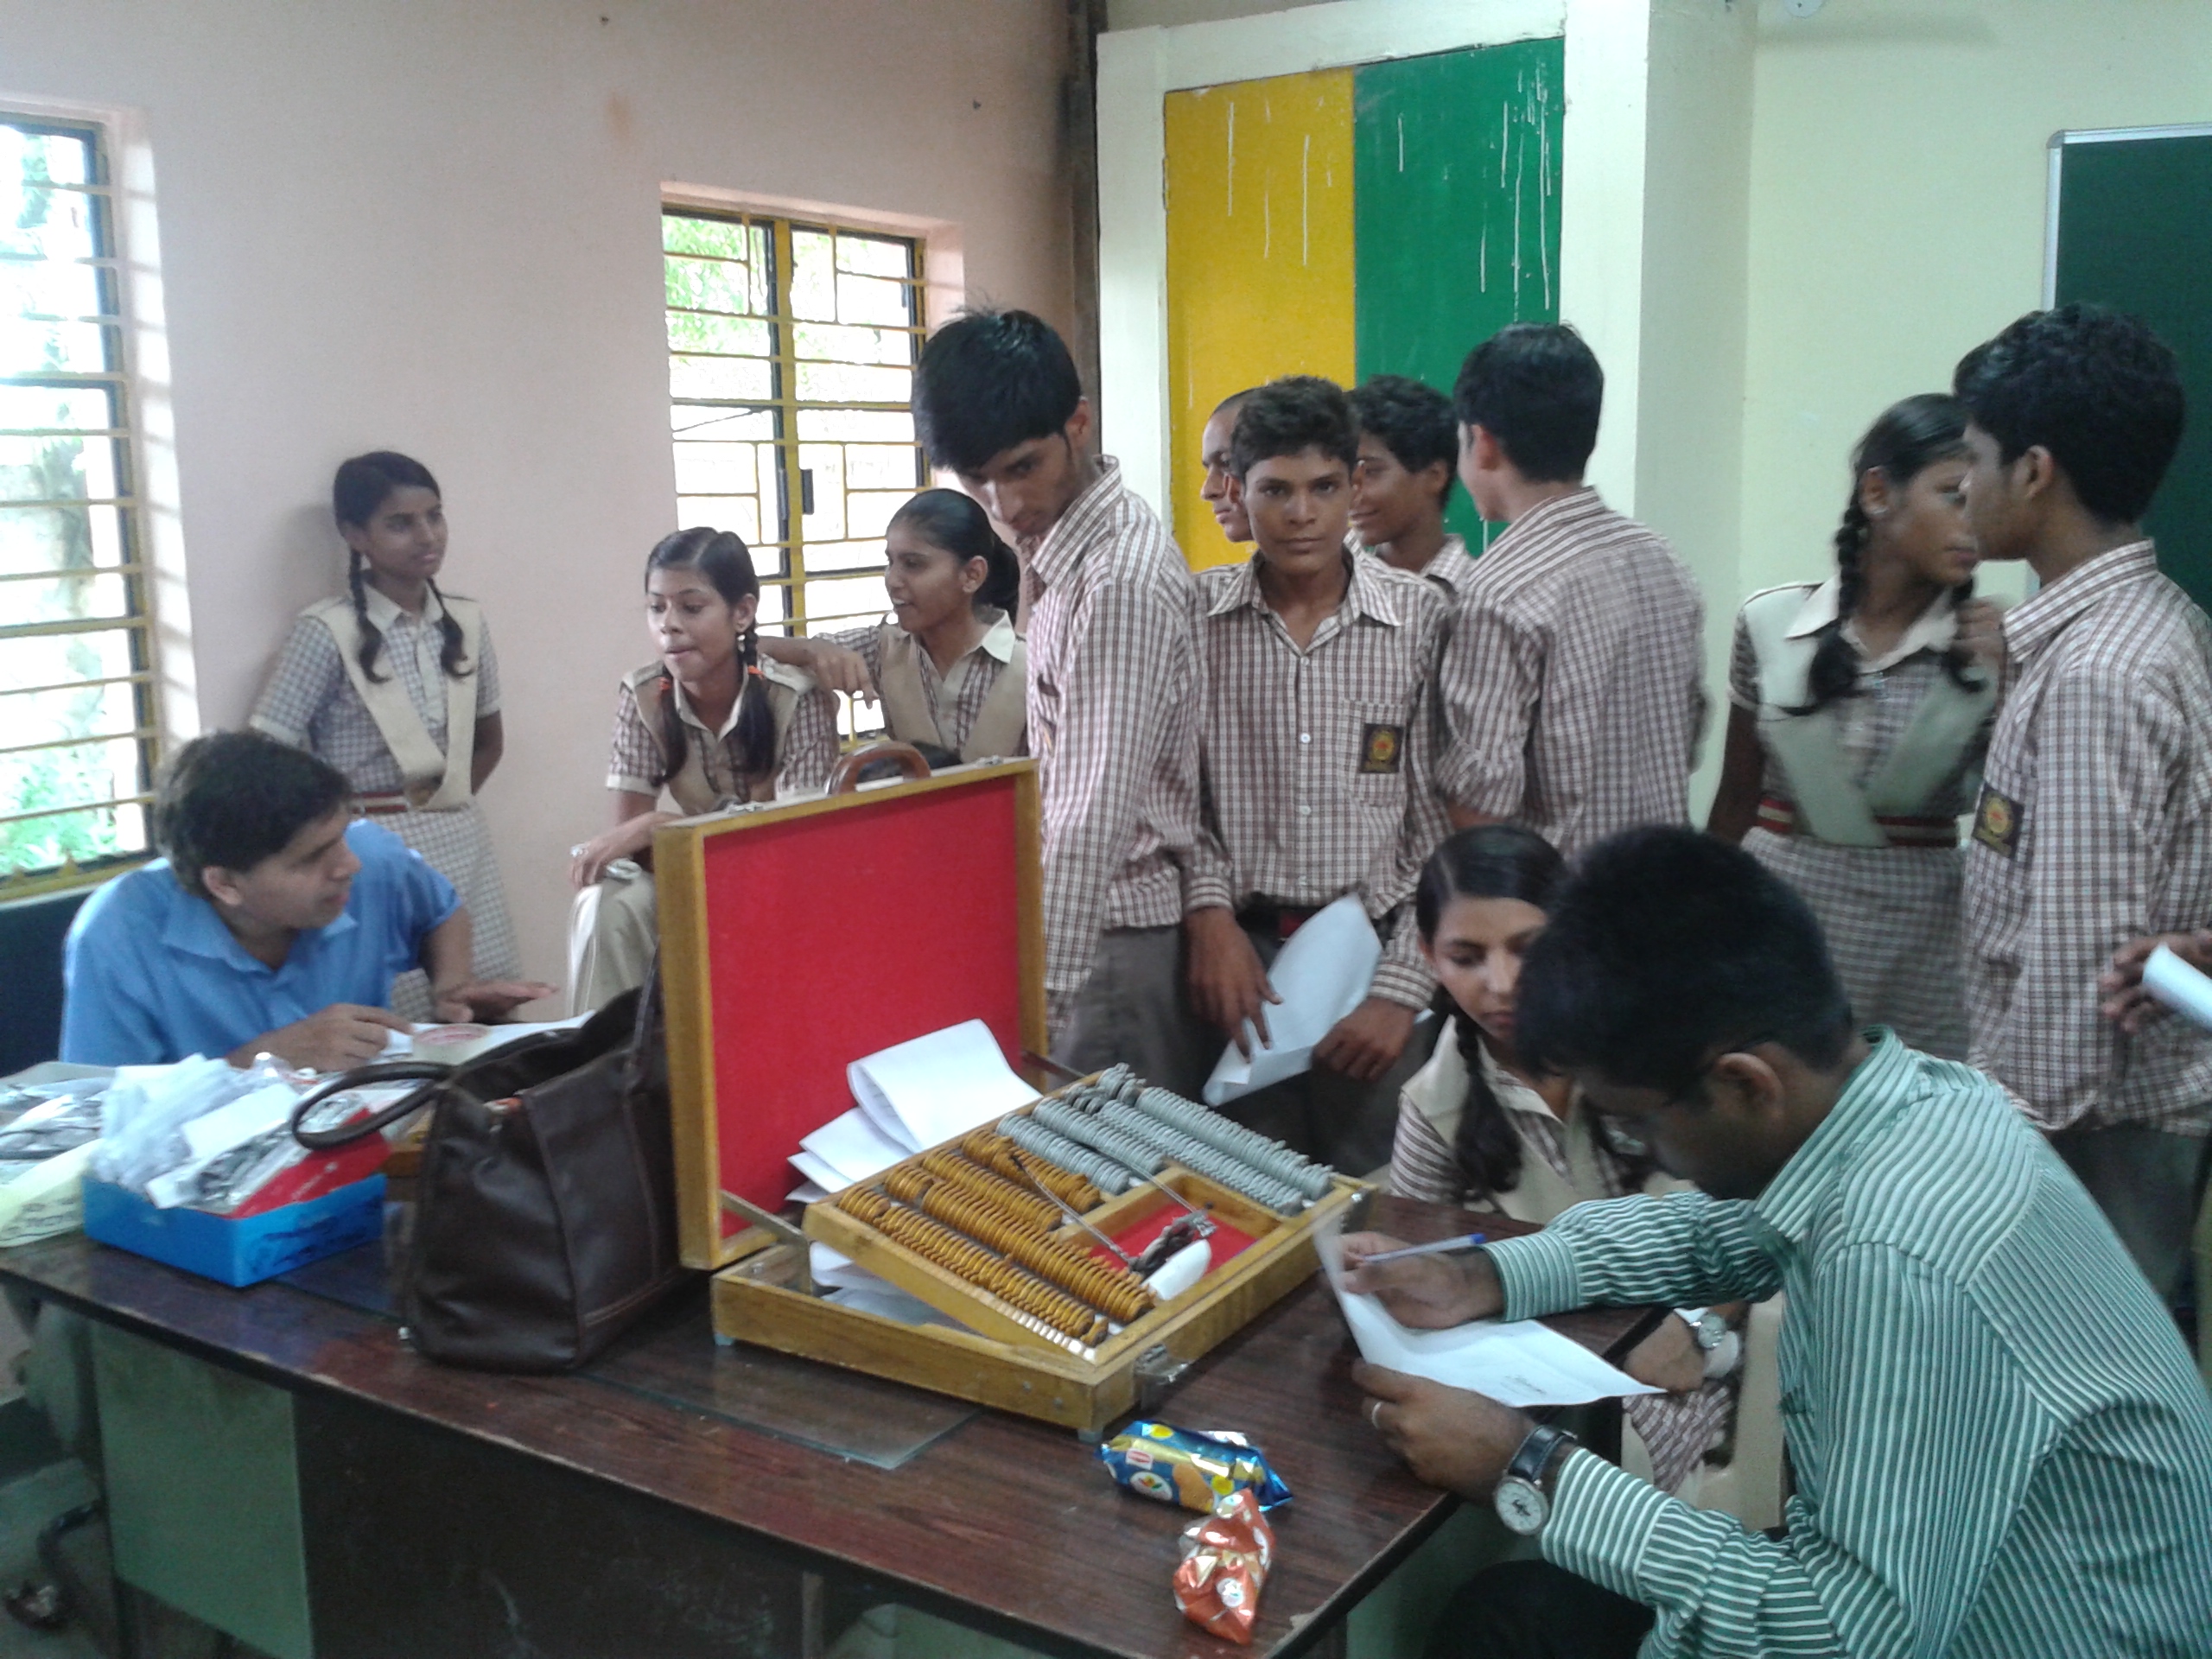 Eye Care Camp by Ek Sangharsh at Govt School, Pochanpur